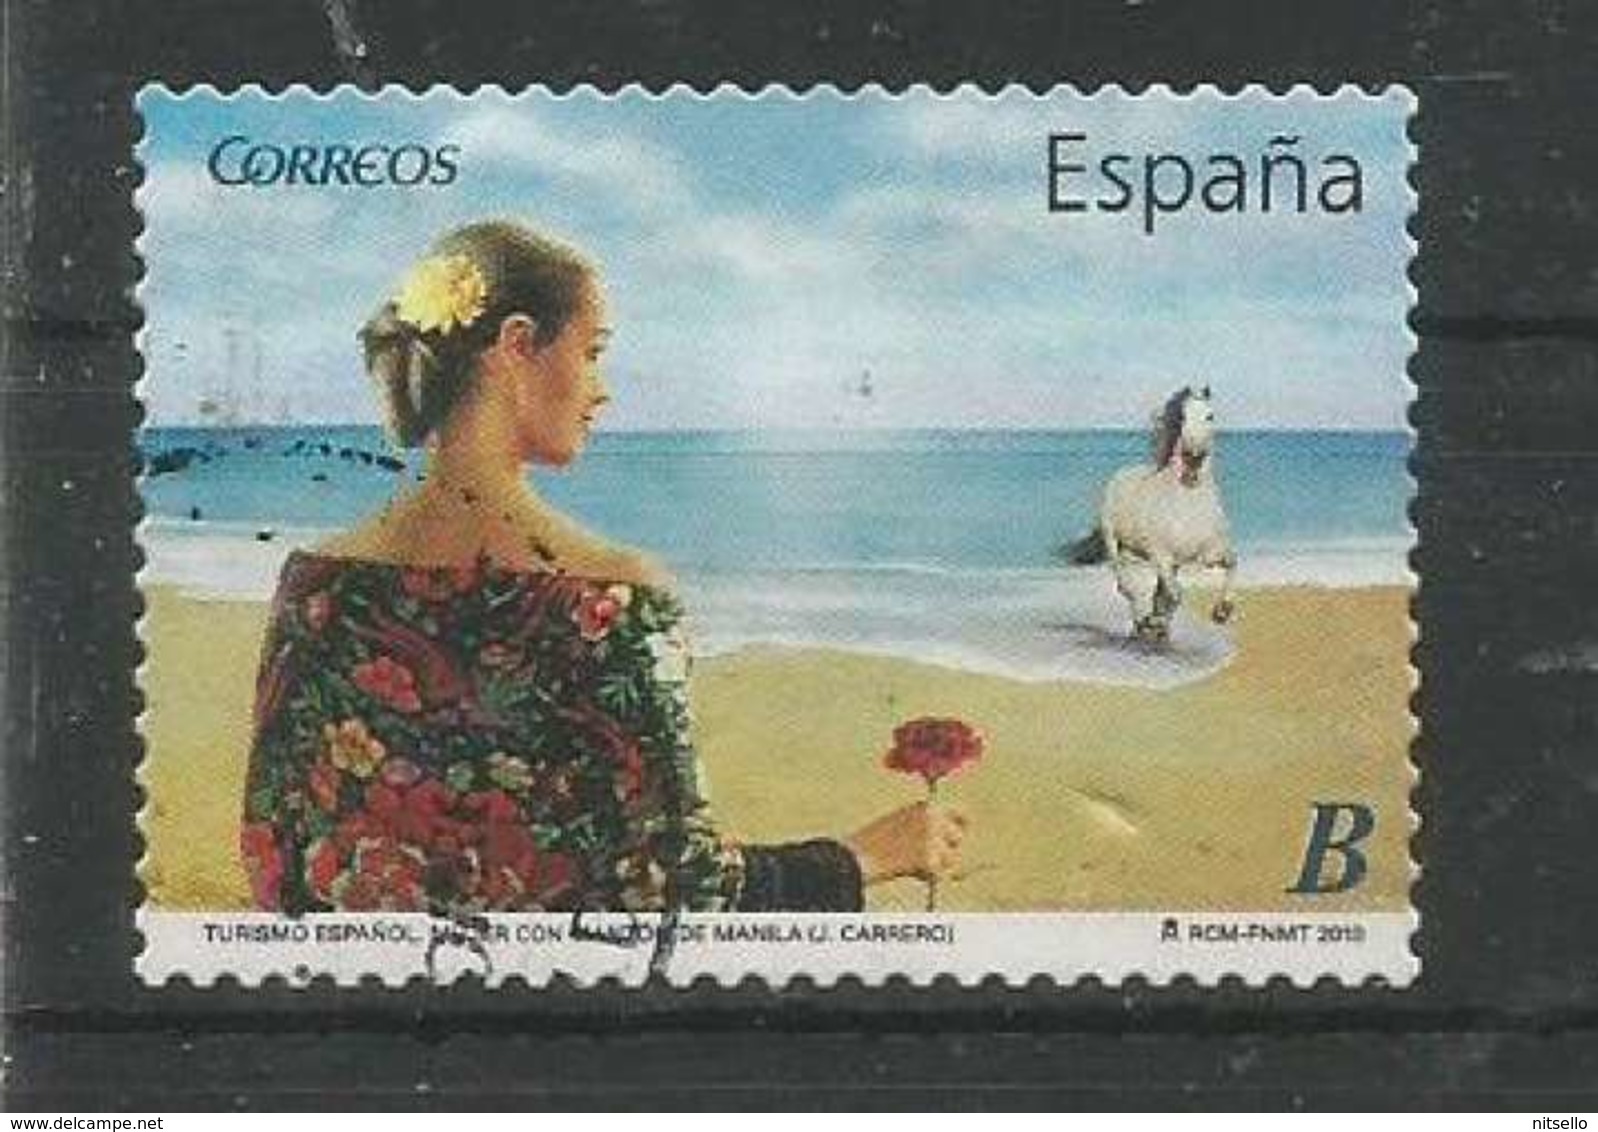 LOTE 2064 ///  (C028) ESPAÑA  2010 - YT N° 4179  ¡¡¡ OFERTA - LIQUIDATION - JE LIQUIDE !!! - Used Stamps